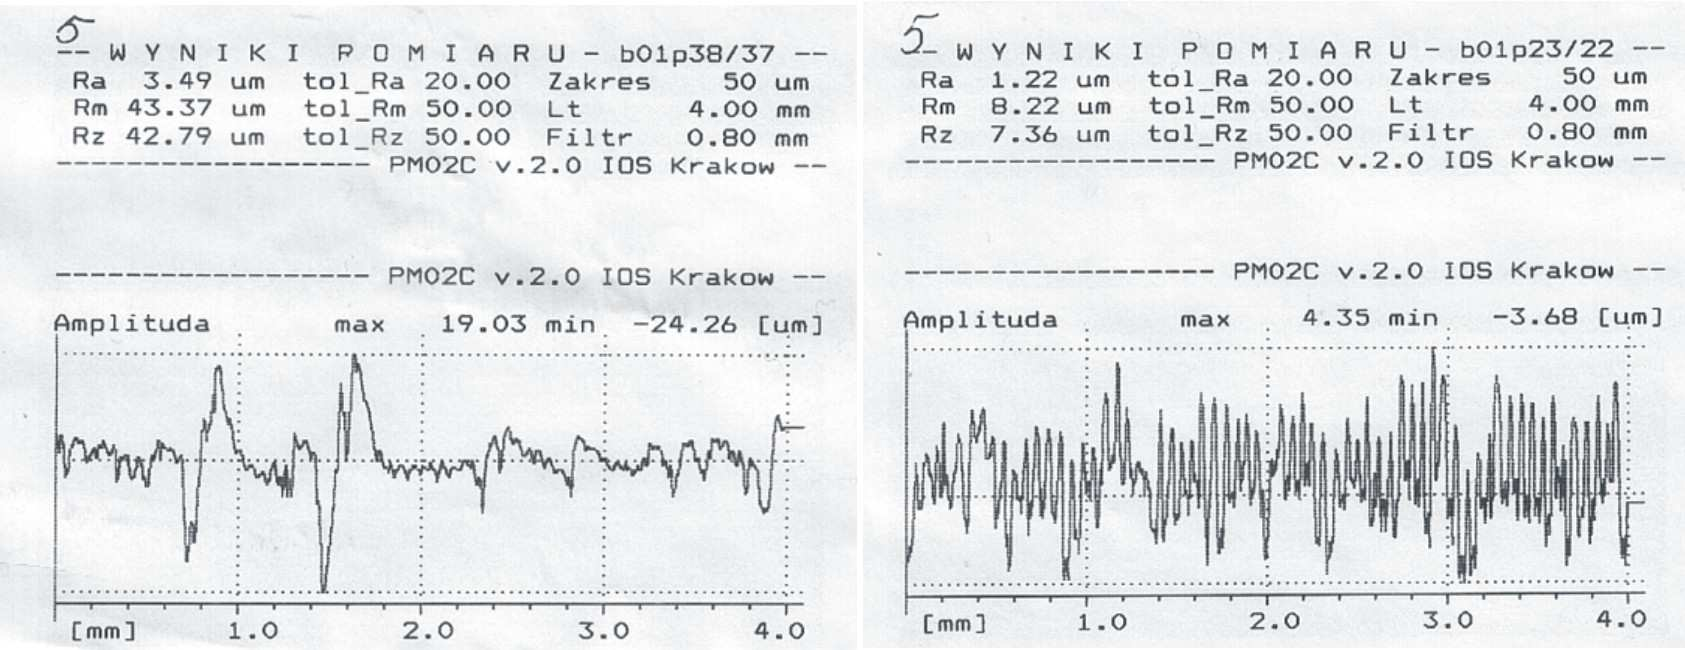 82 T R I B O L O G I A 5-2012 przed procesem tarcia wynosiło 1,58 µm, natomiast po procesie tarcia Ra = 3,49 µm.